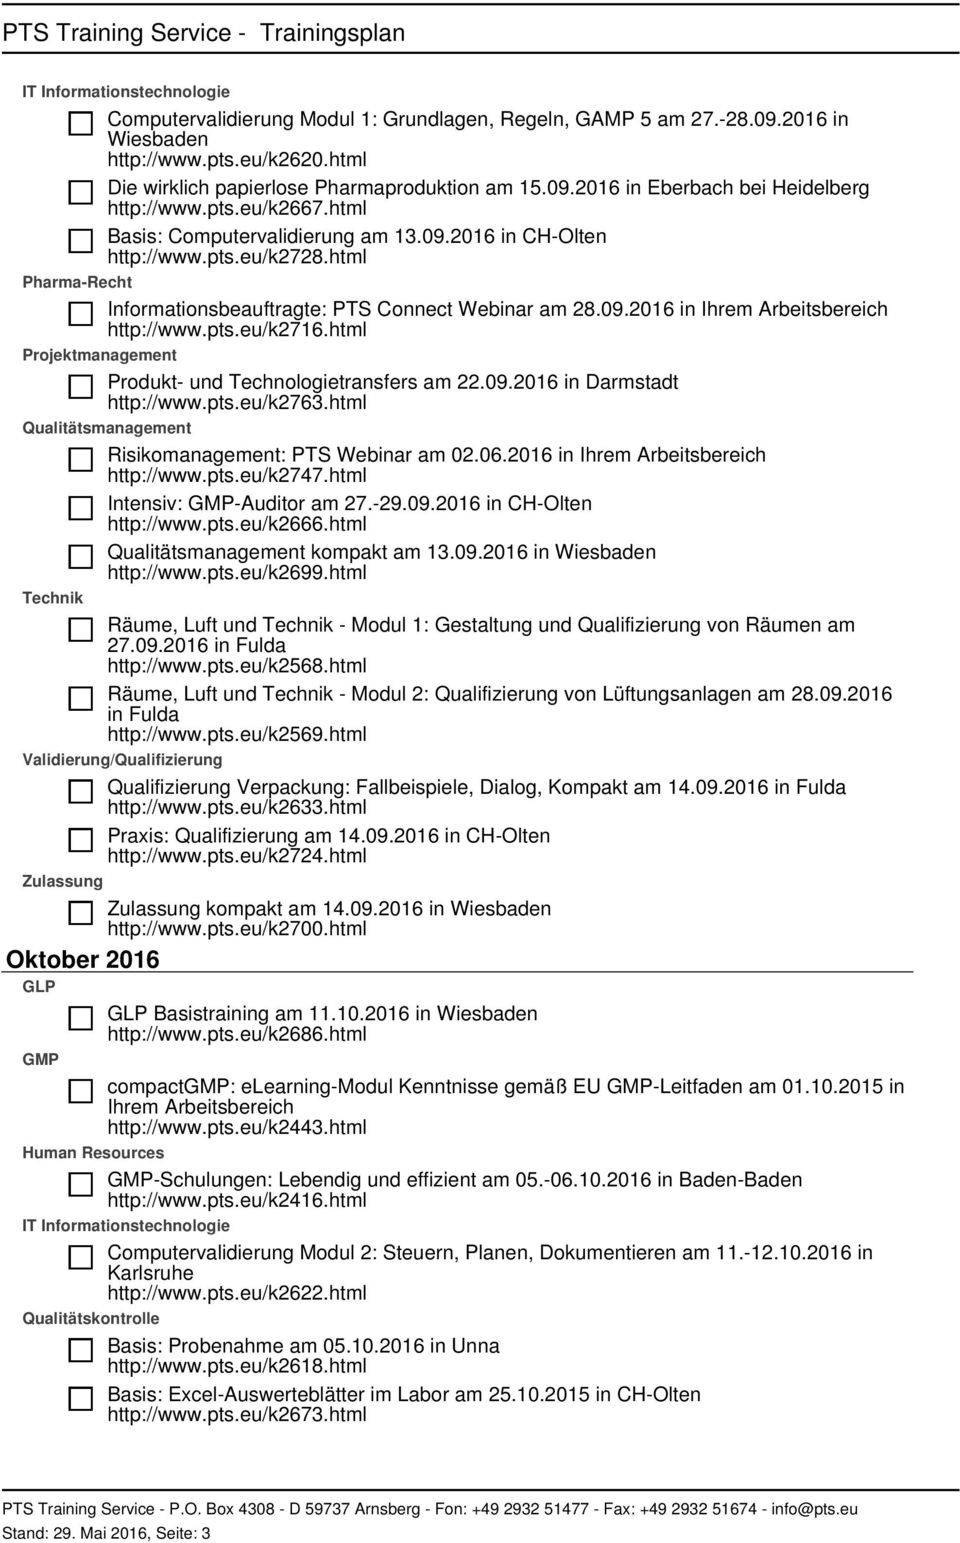 pts.eu/k2716.html Projektmanagement Produkt- und Technologietransfers am 22.09.2016 in Darmstadt http://www.pts.eu/k2763.html Risikomanagement: PTS Webinar am 02.06.